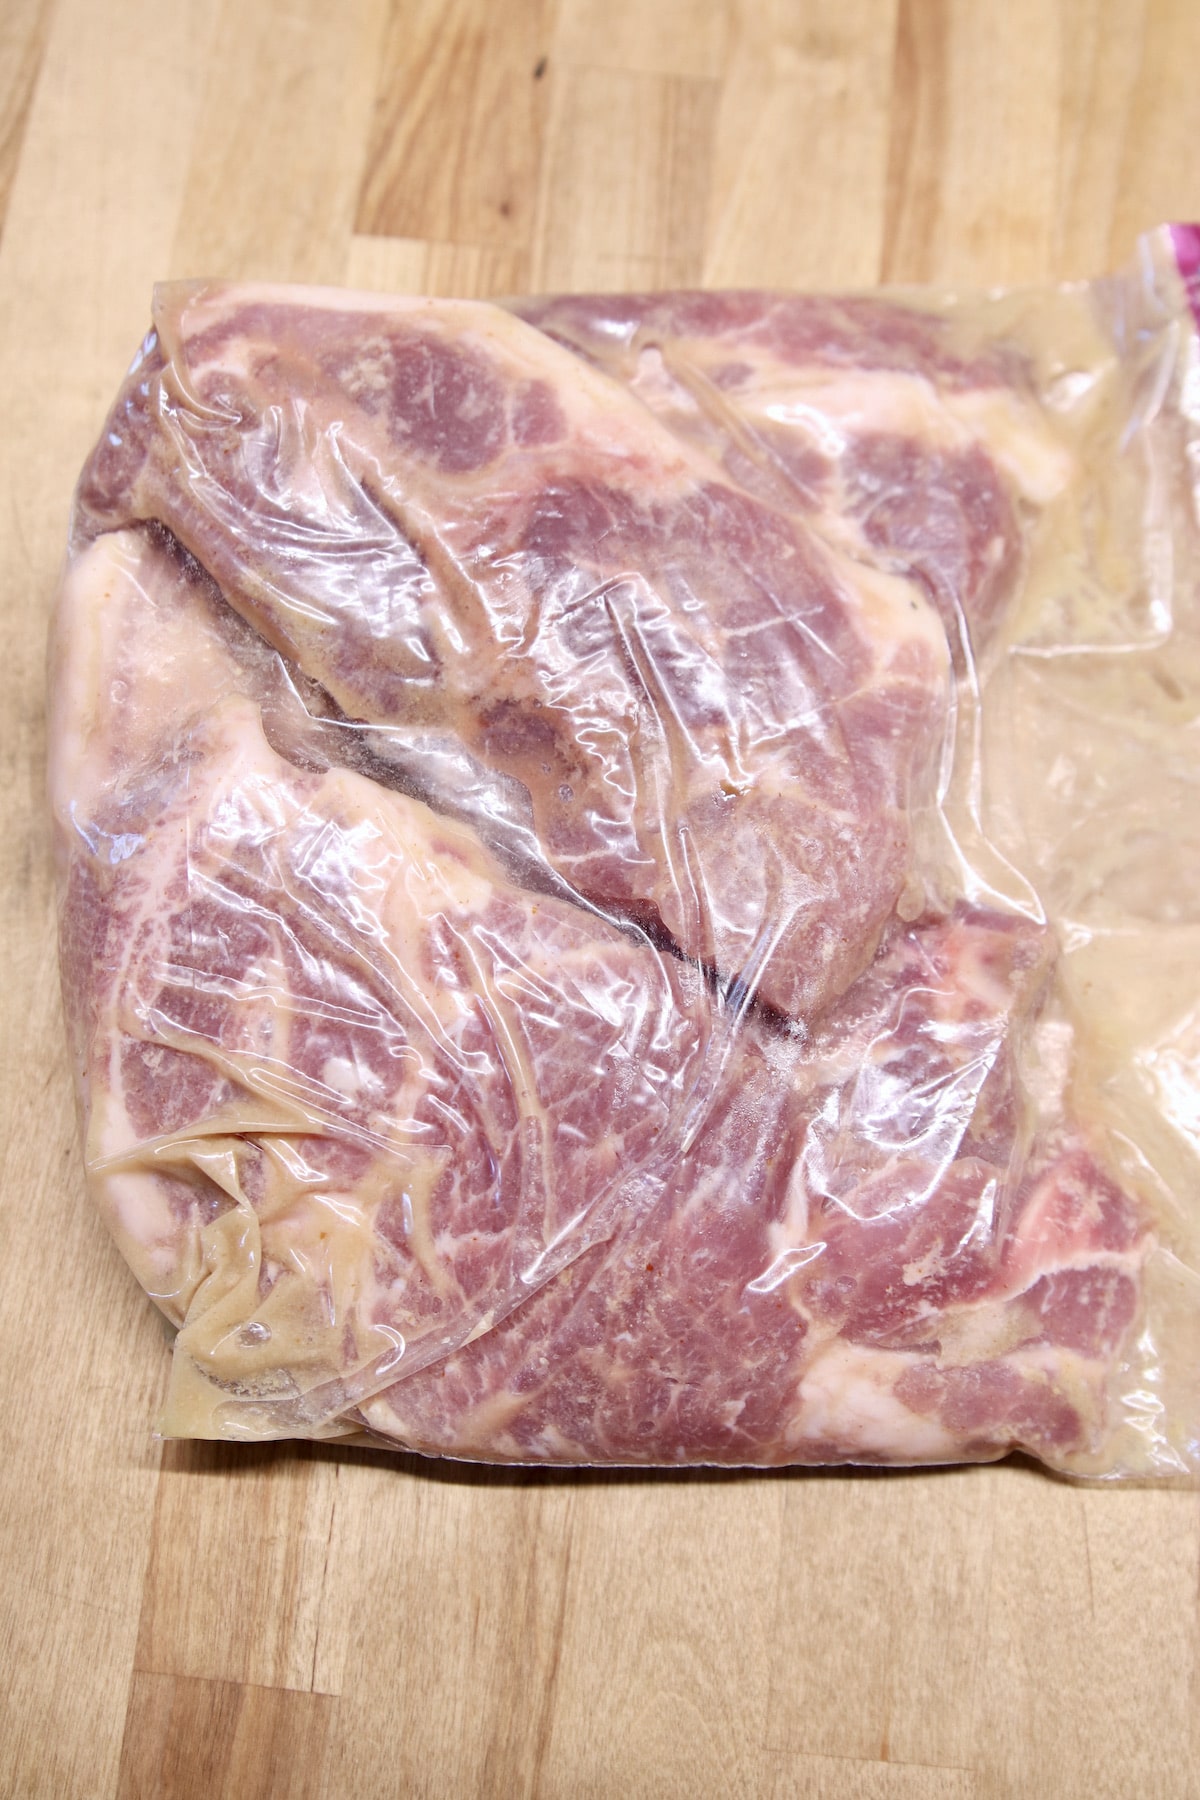 Bag of marinating pork steaks.